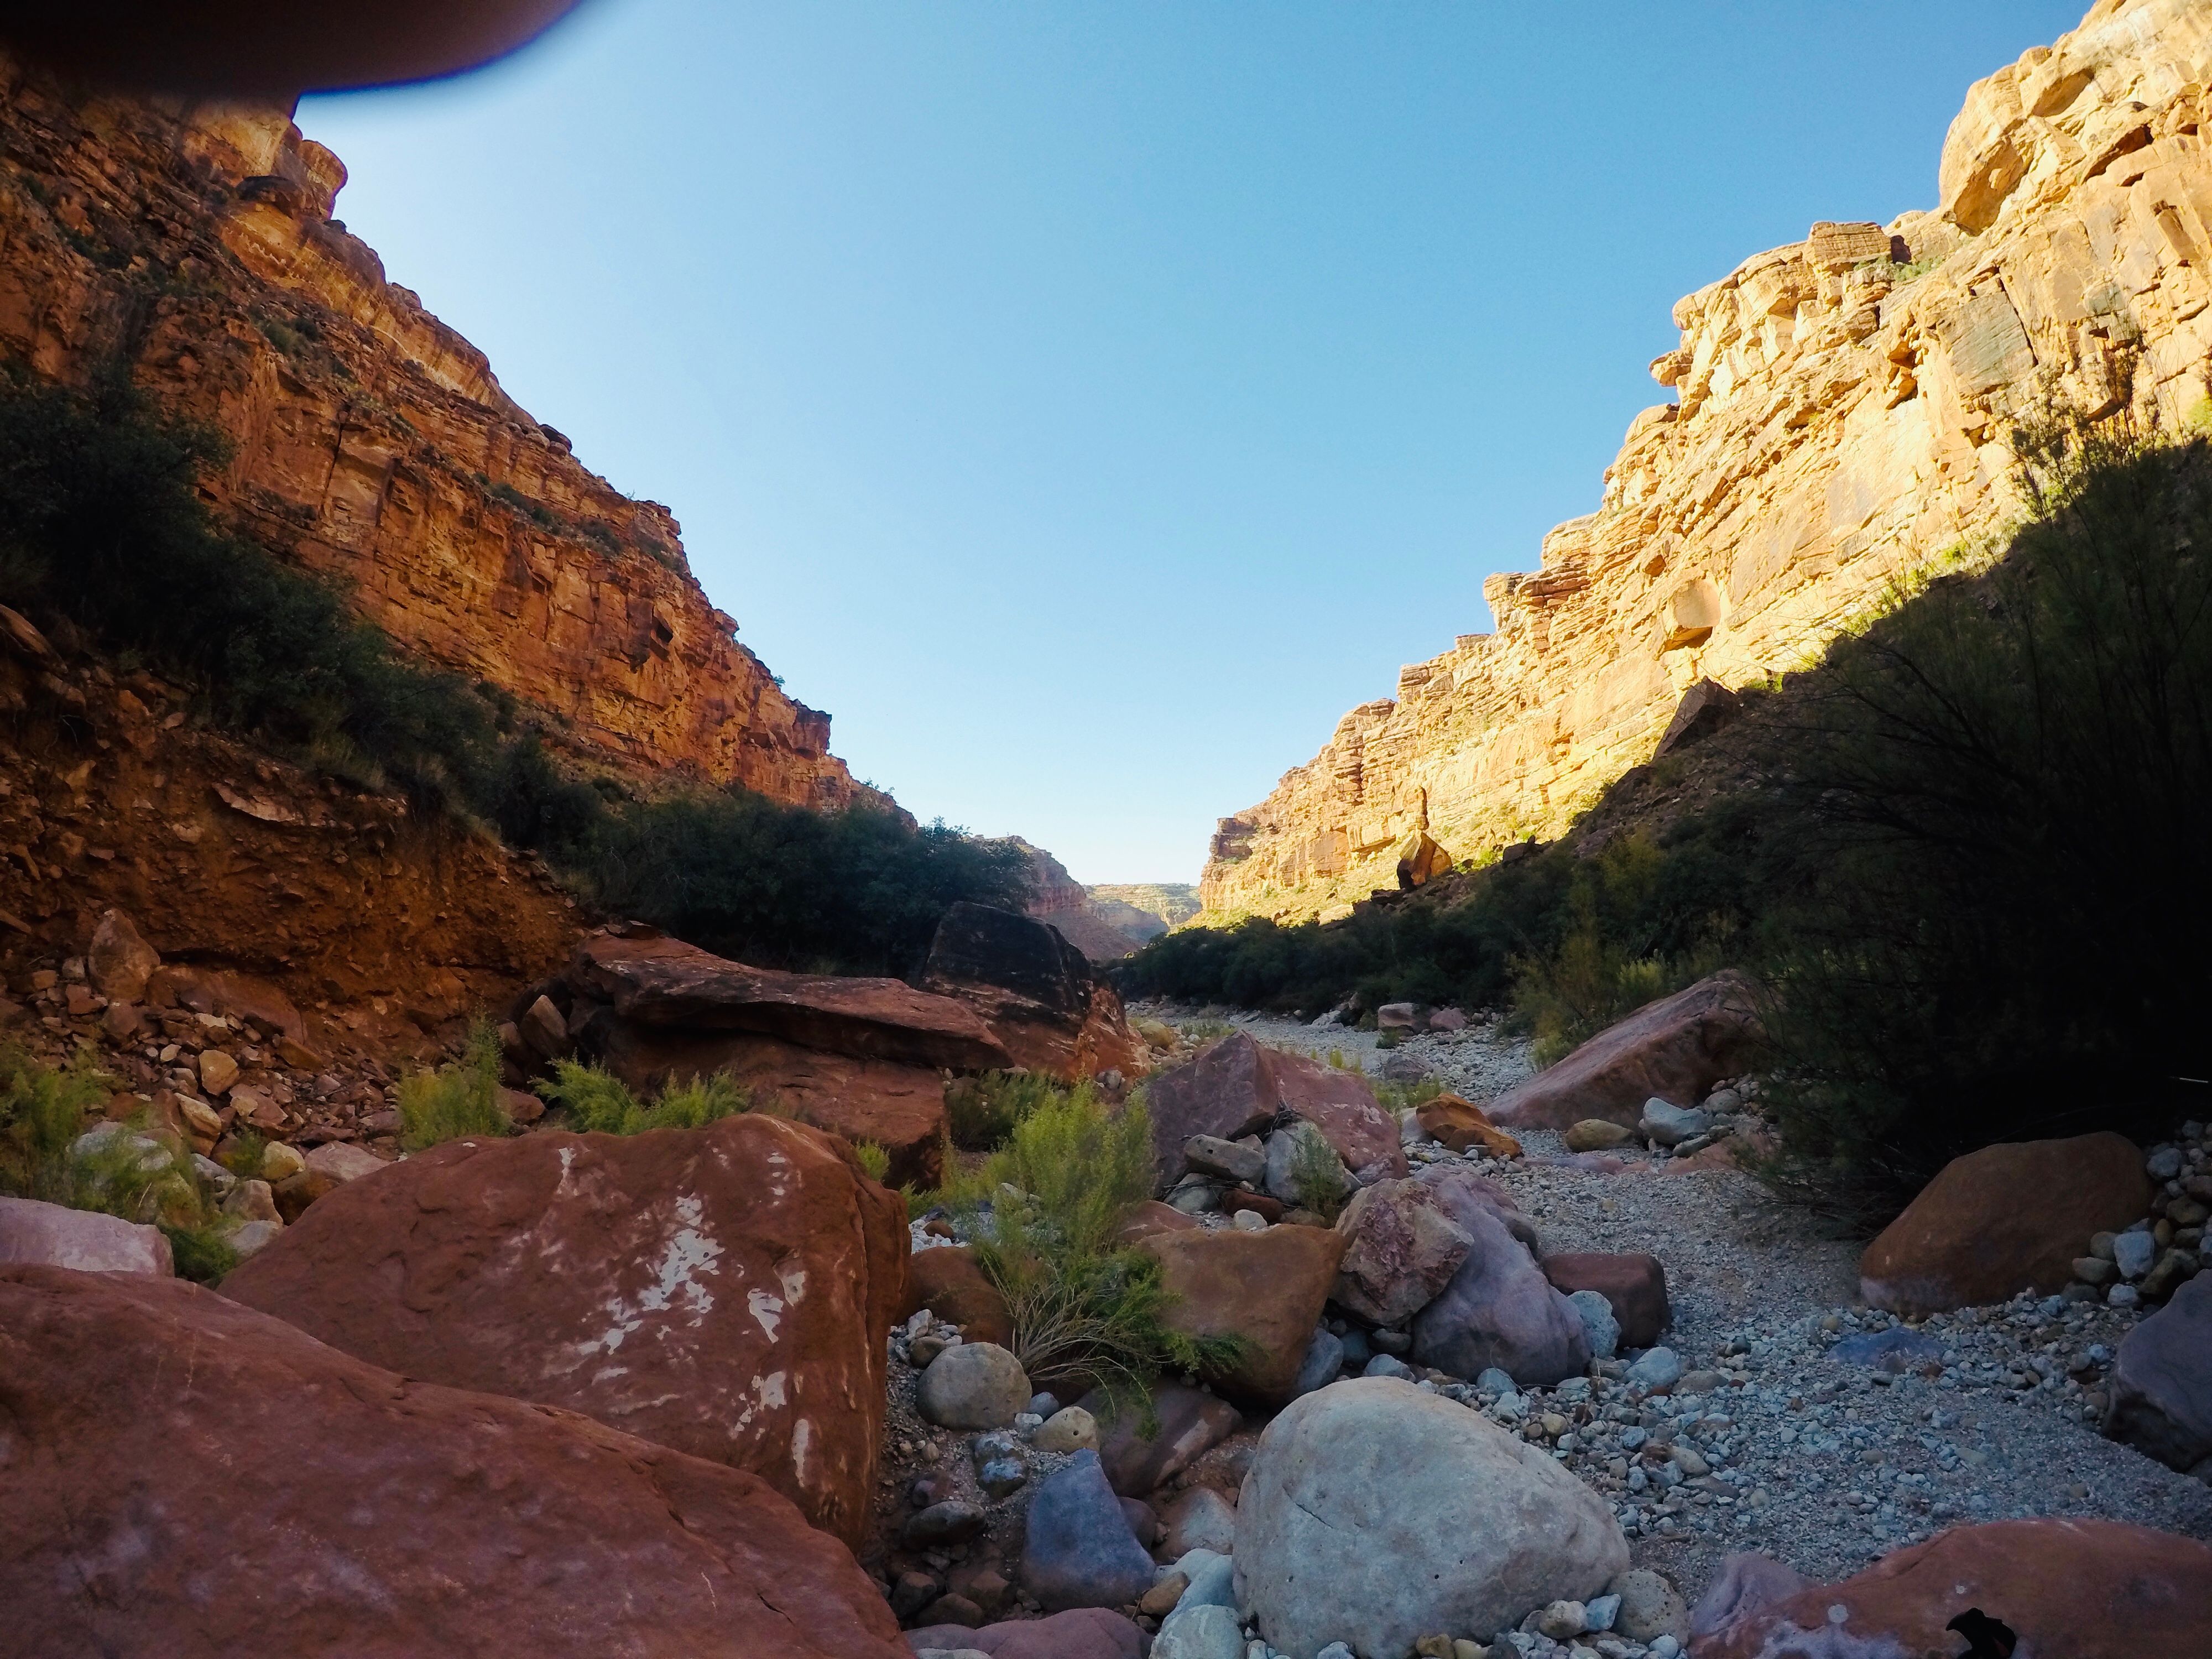 More canyon awesomeness